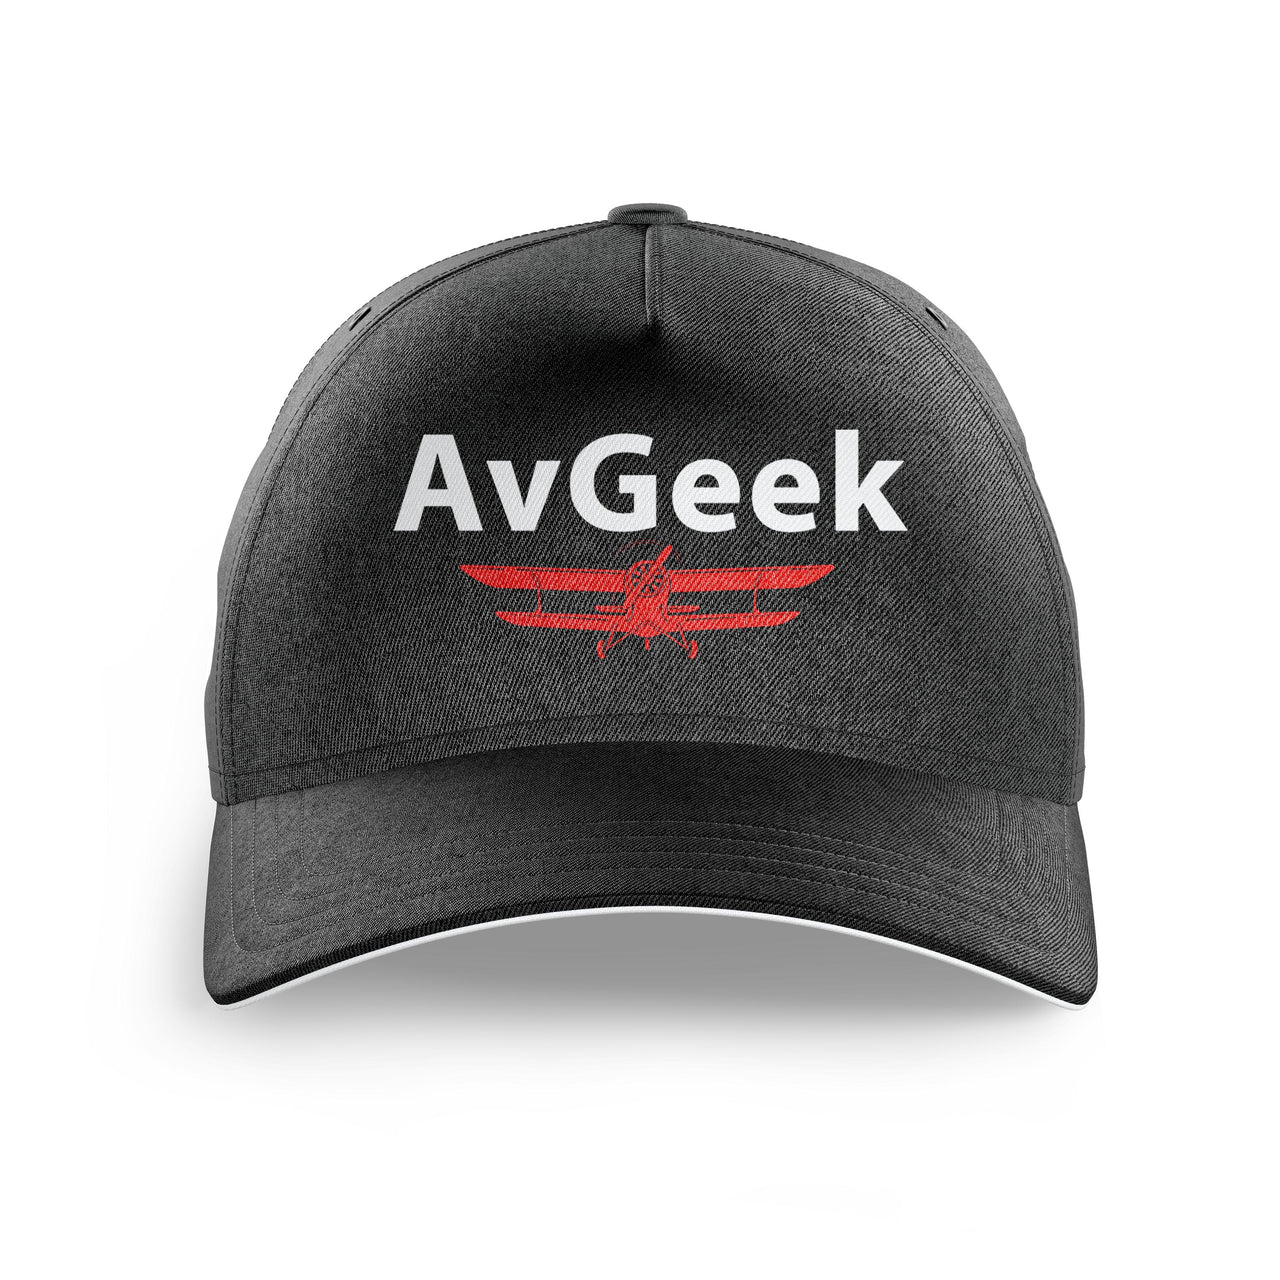 Avgeek Printed Hats